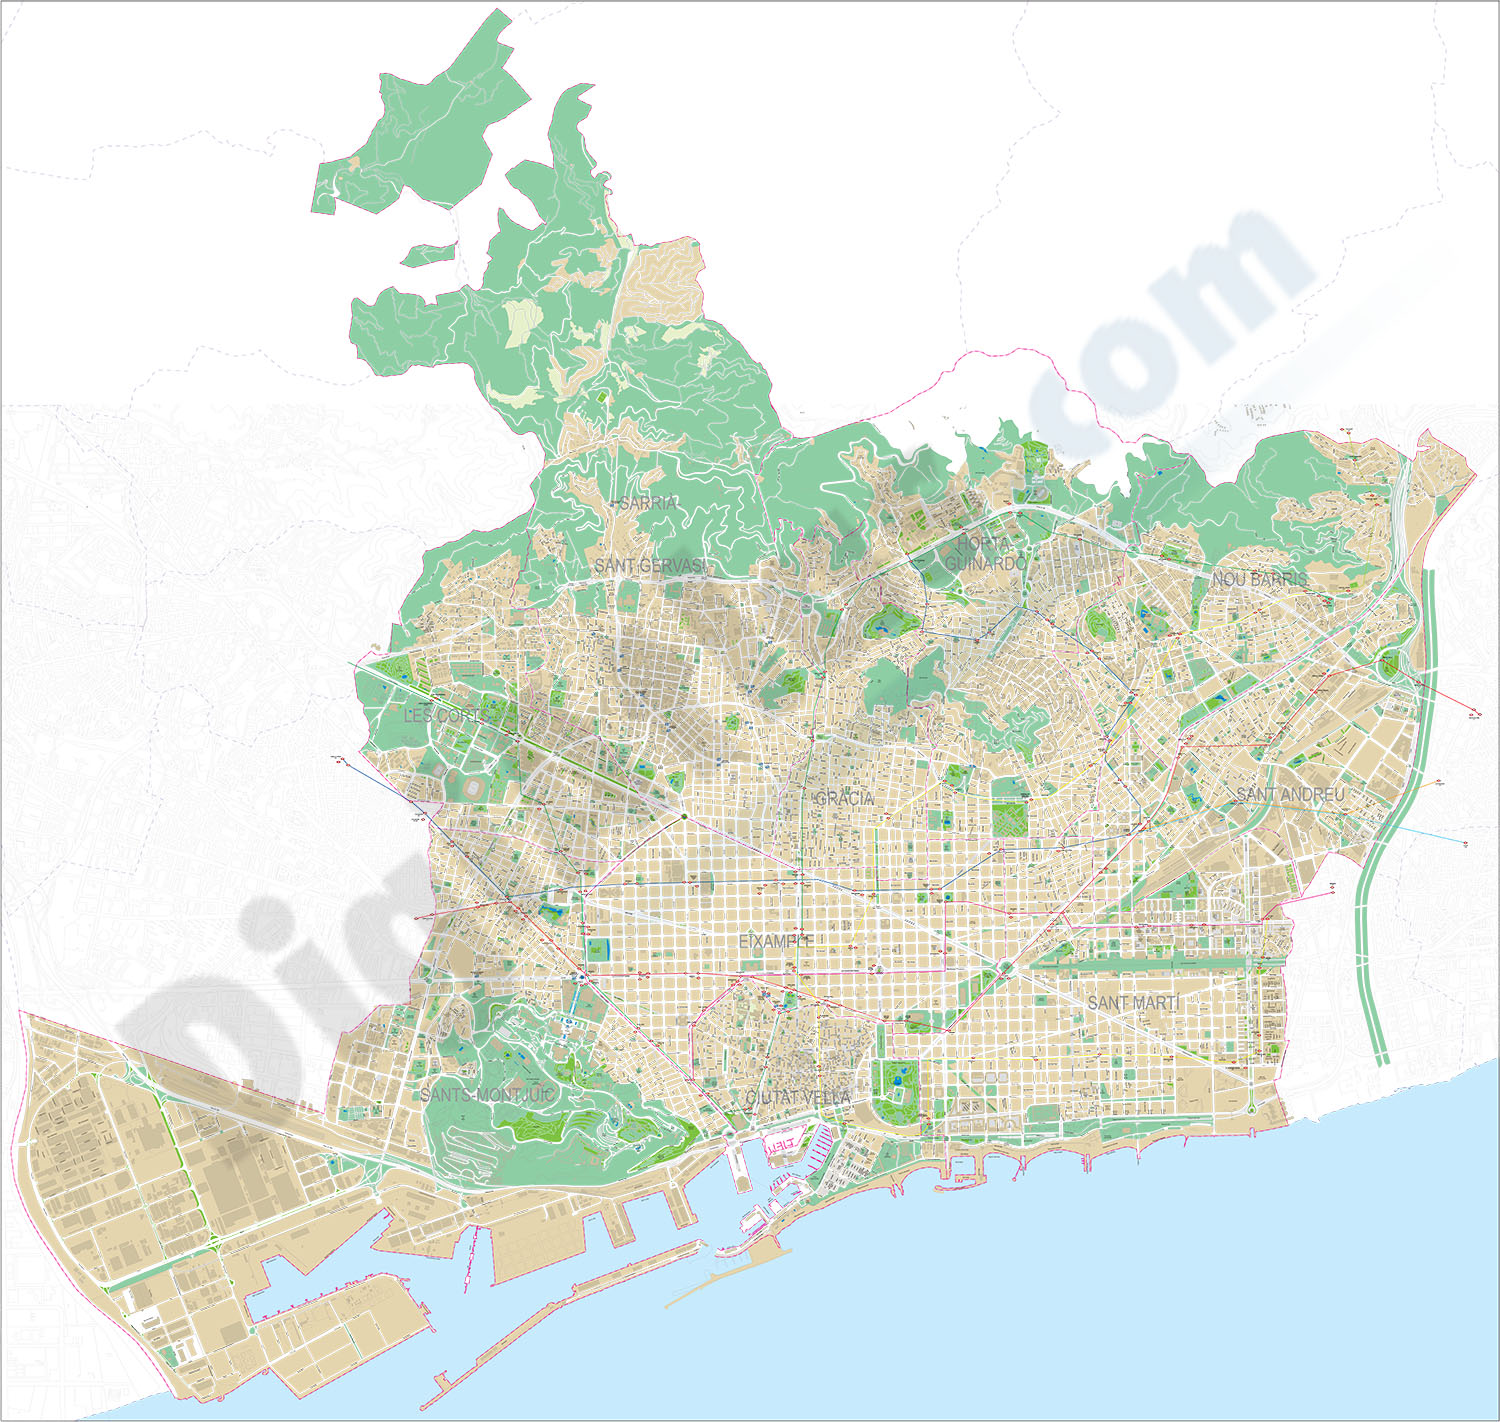 Barcelona entire city map